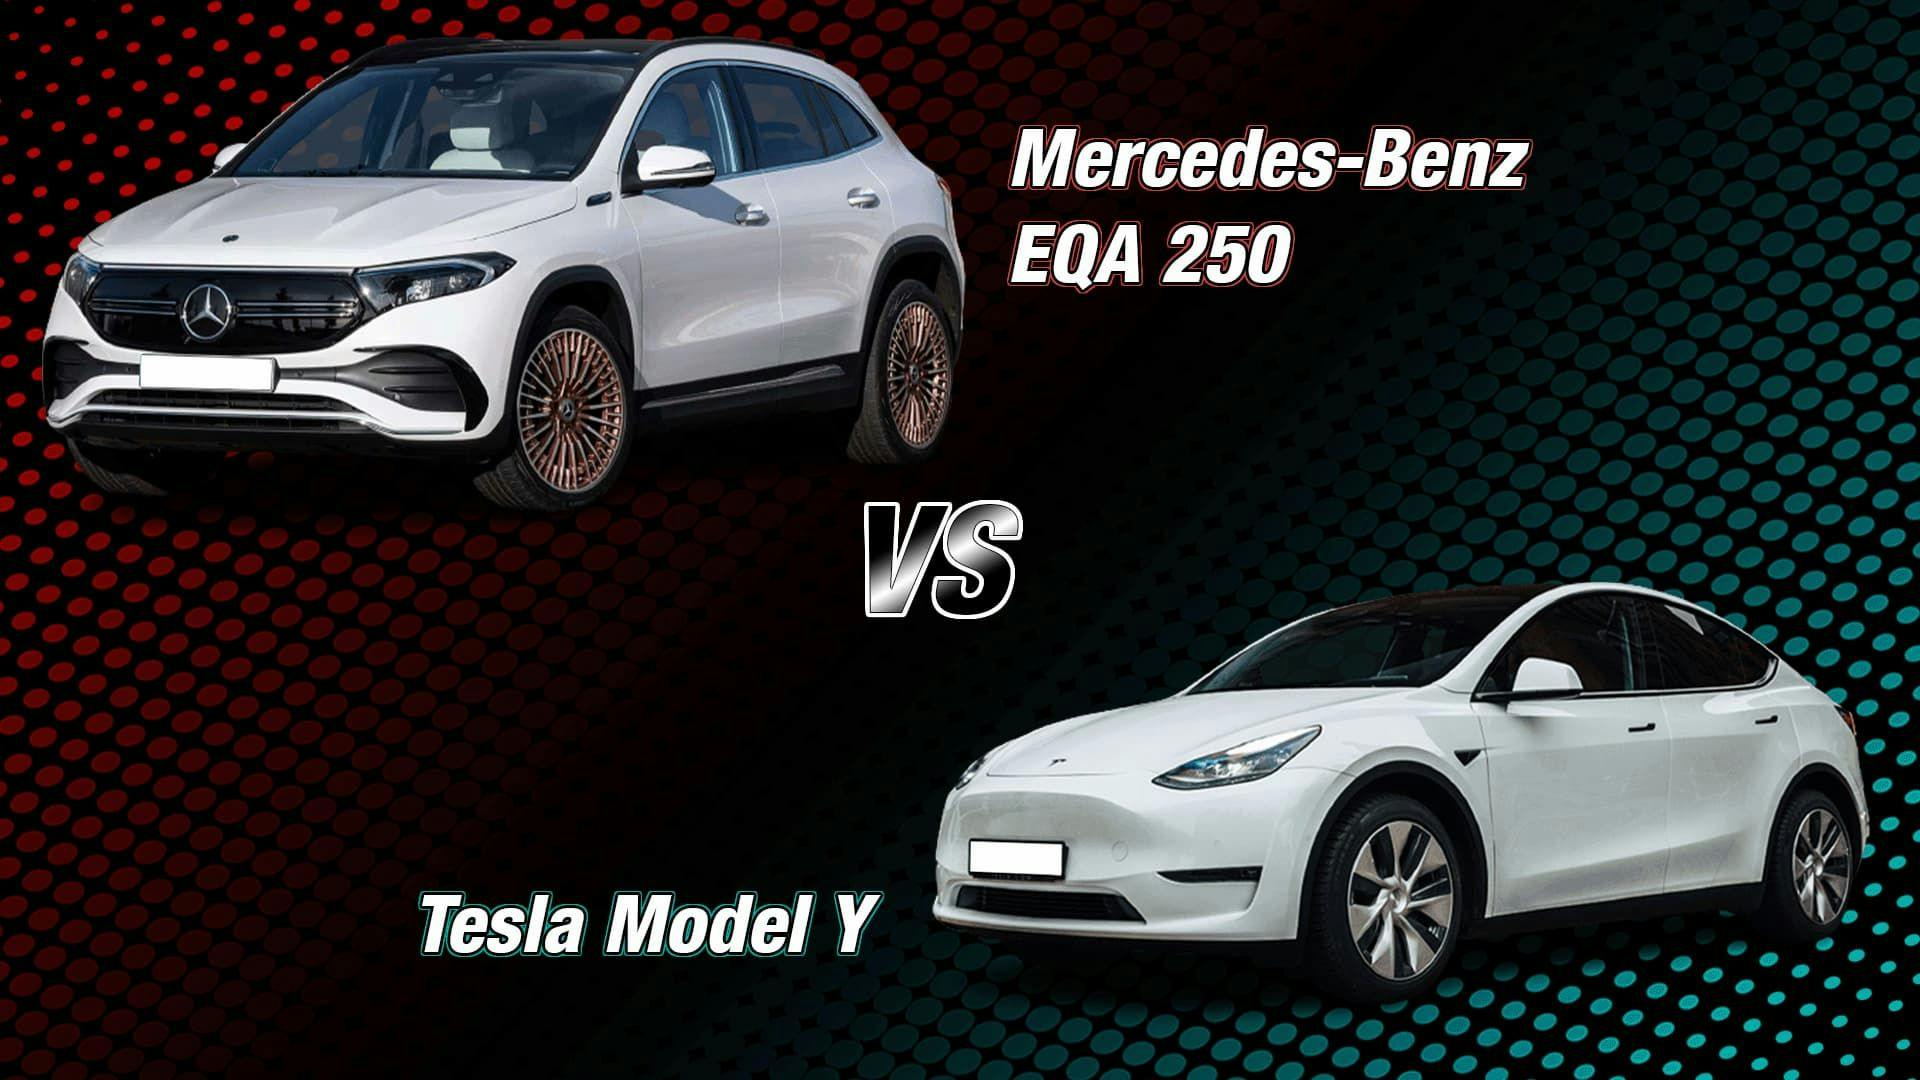 Mercedes-Benz EQA 250 vs Tesla Model Y comparison